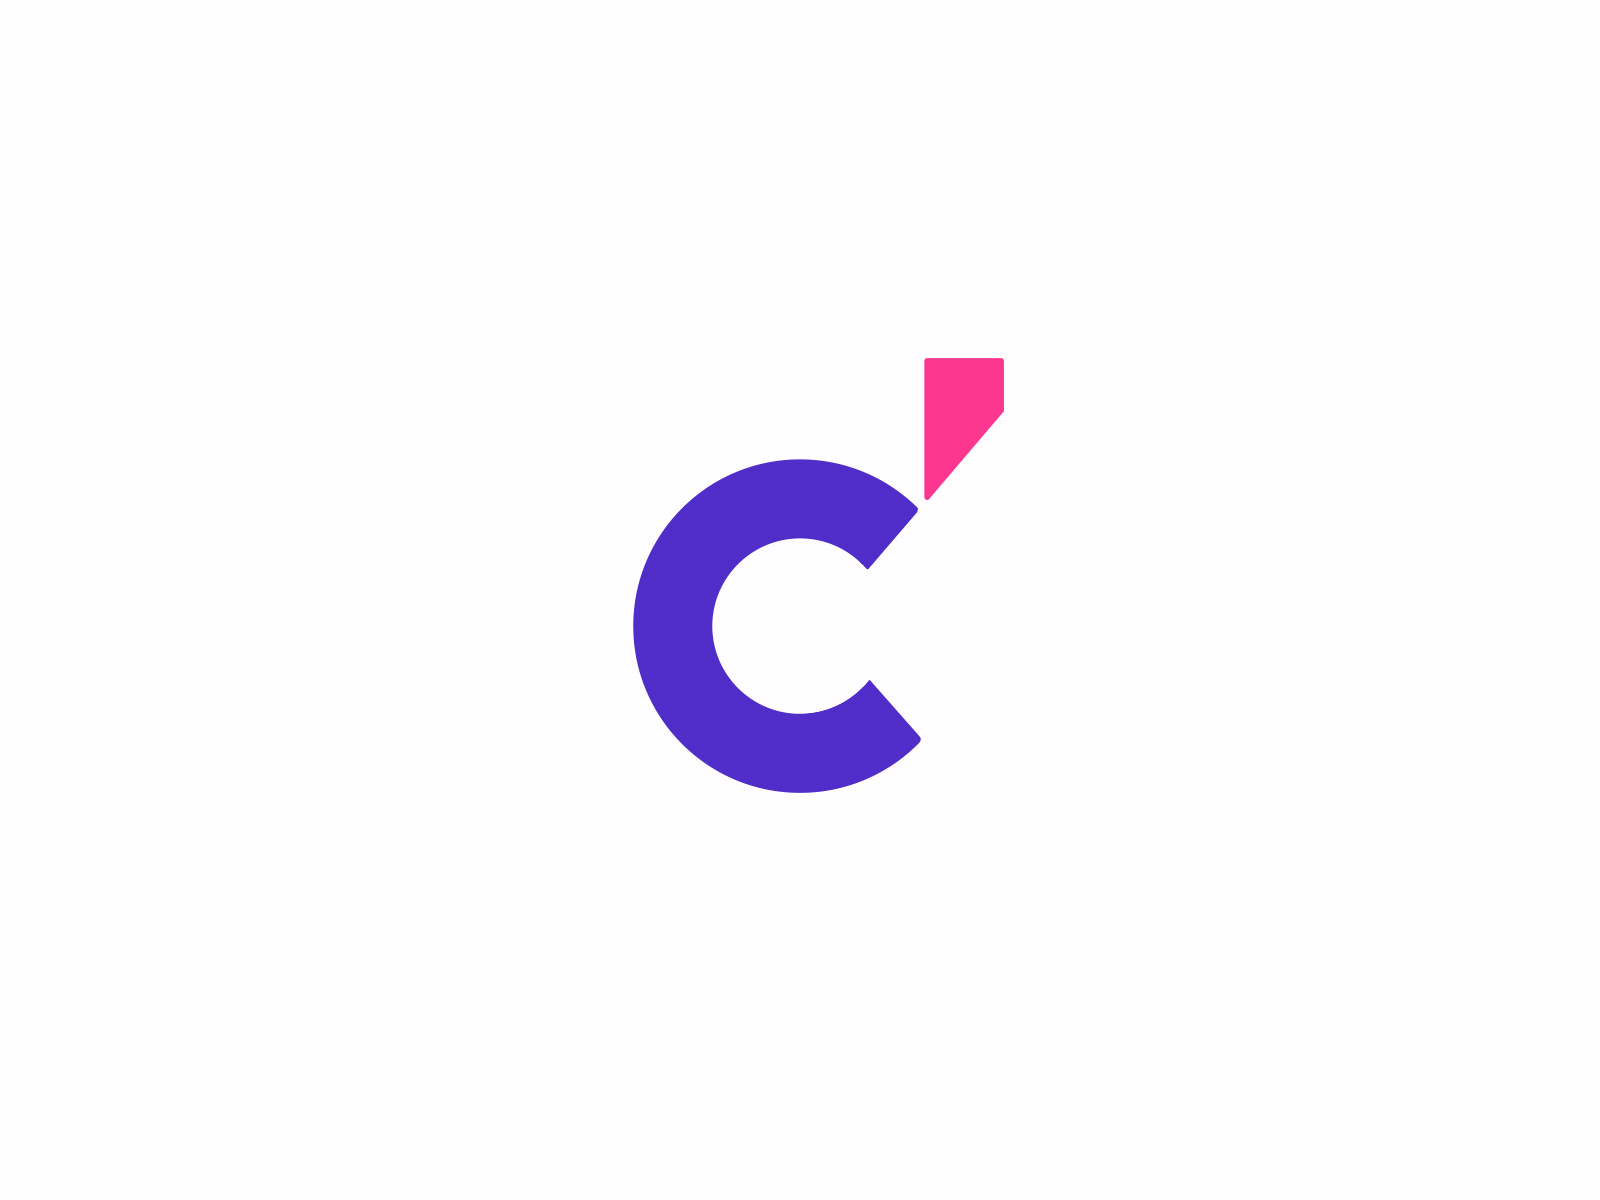 Animated logo. Логотип 2d анимации. Моушен логотип. Анимация лого пинтереста.